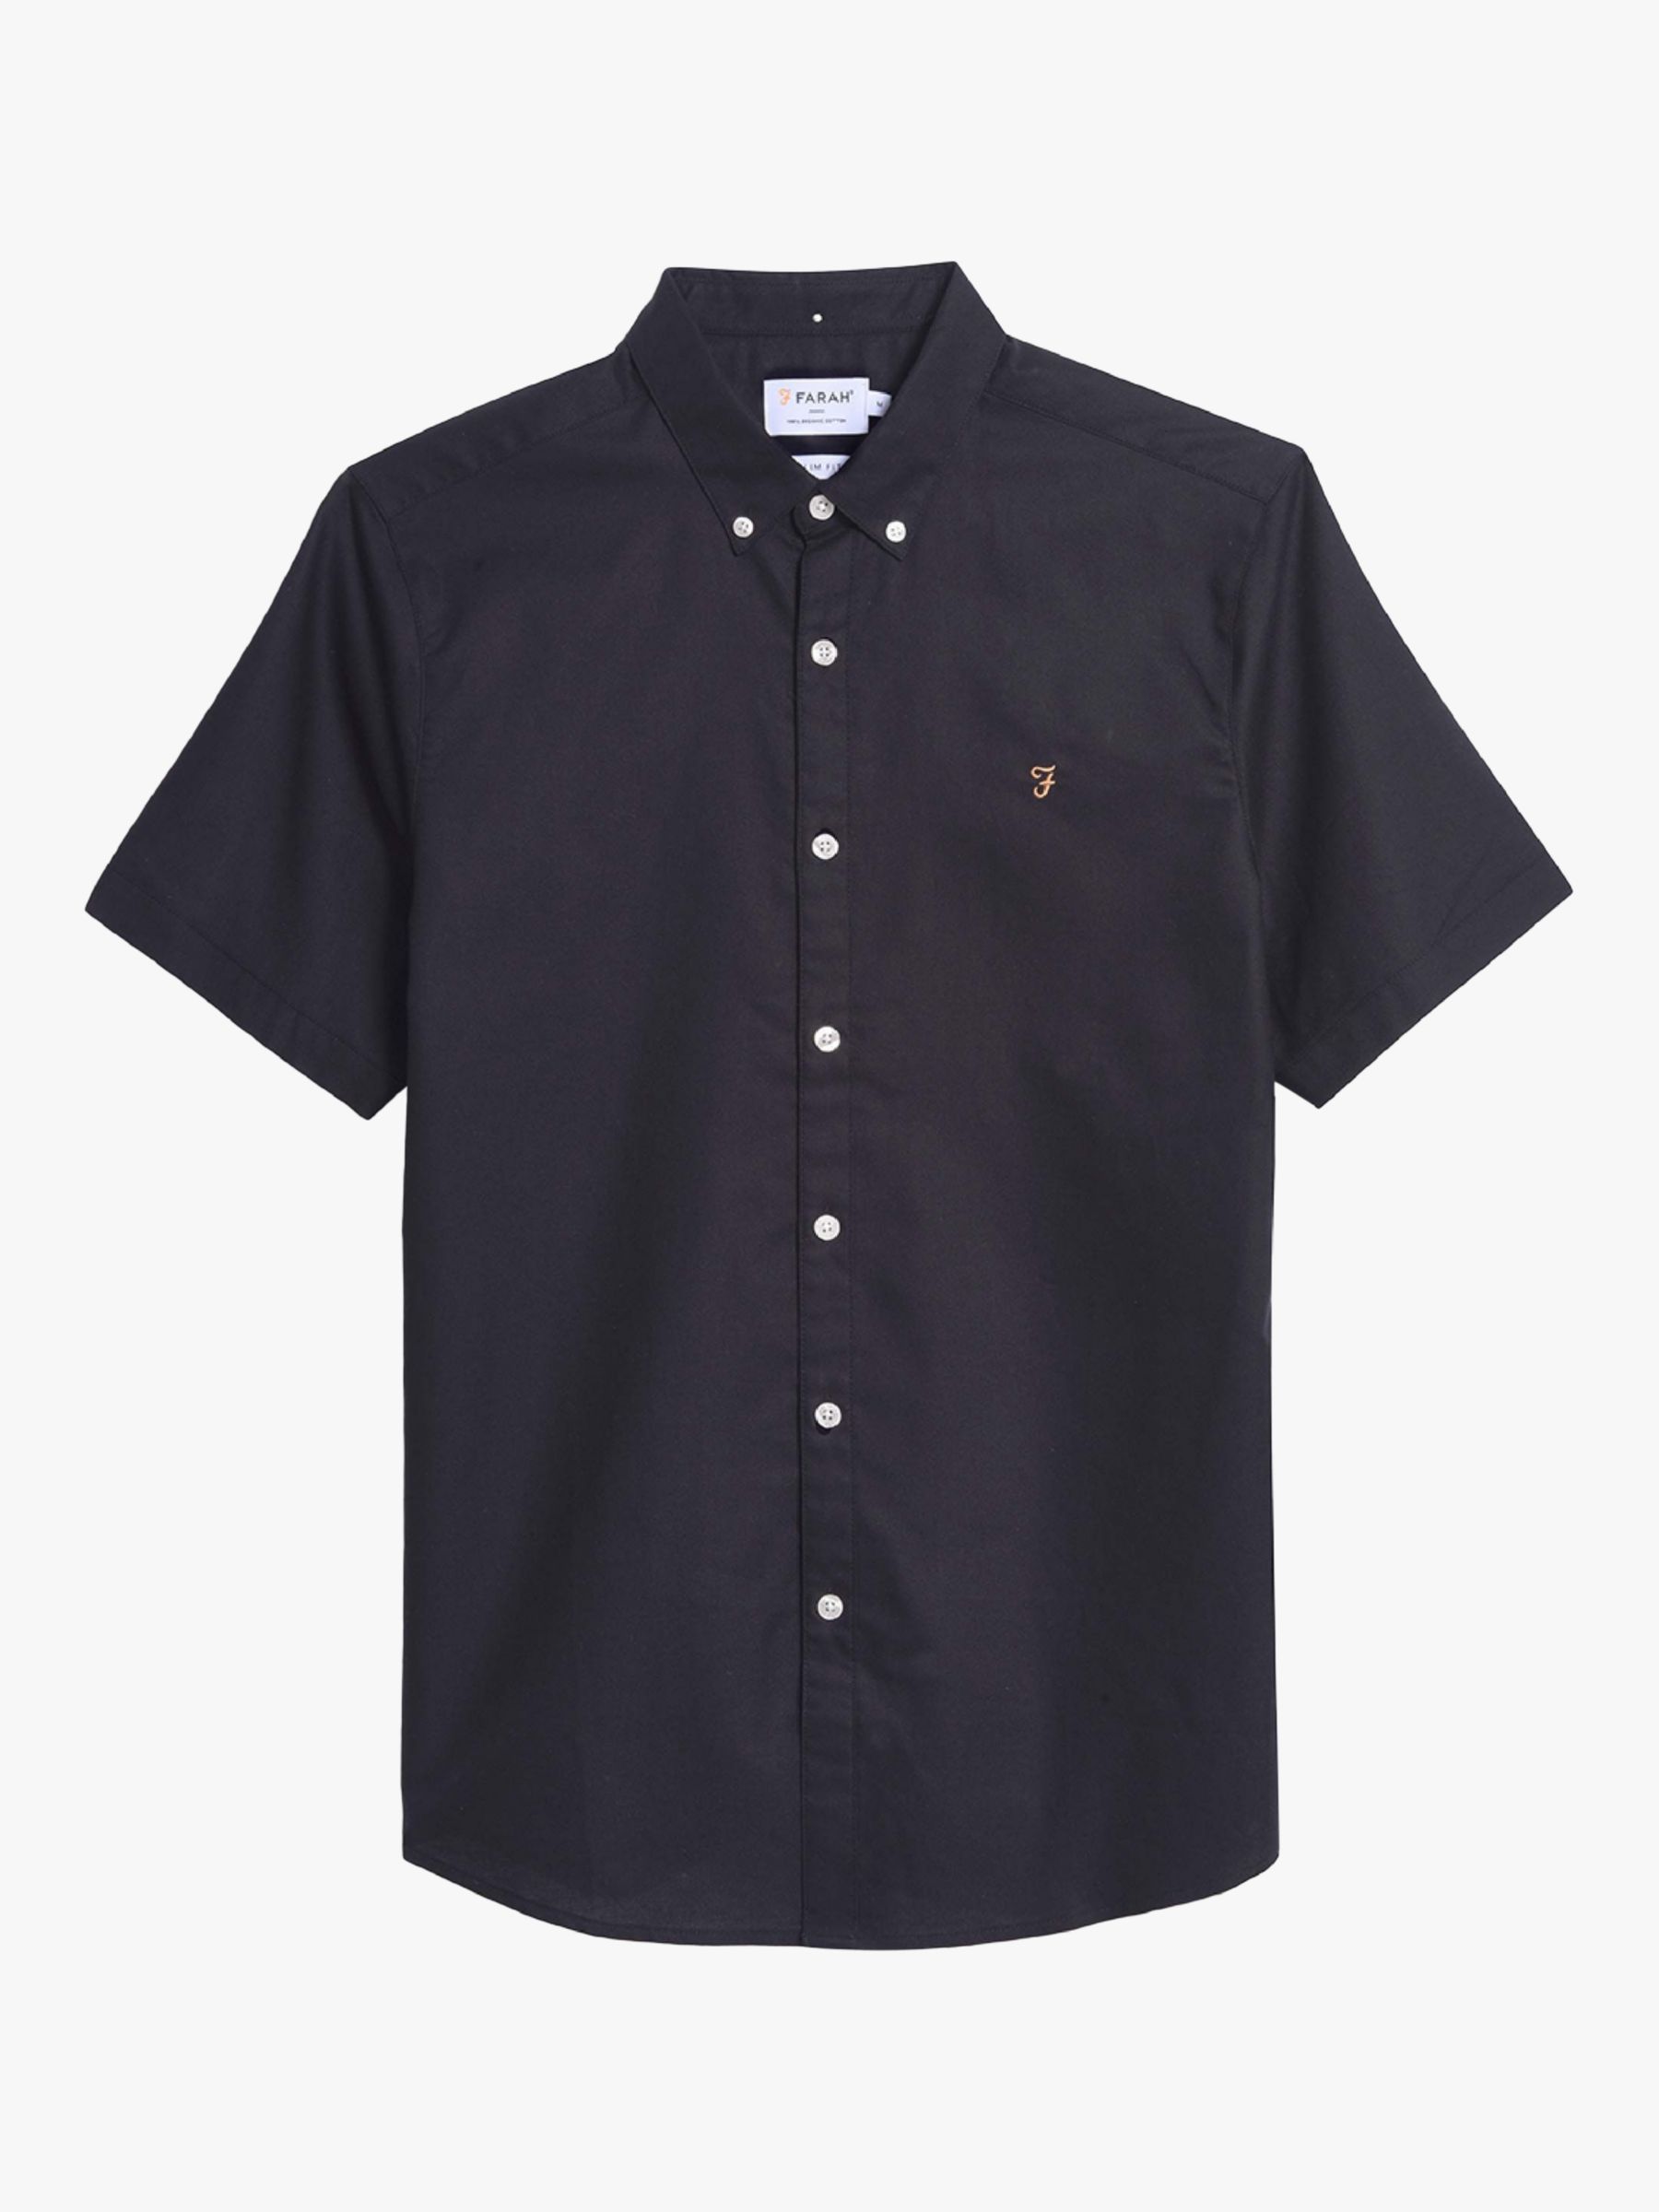 Farah Brewer Slim Fit Short Sleeve Organic Cotton Oxford Shirt, Navy, S